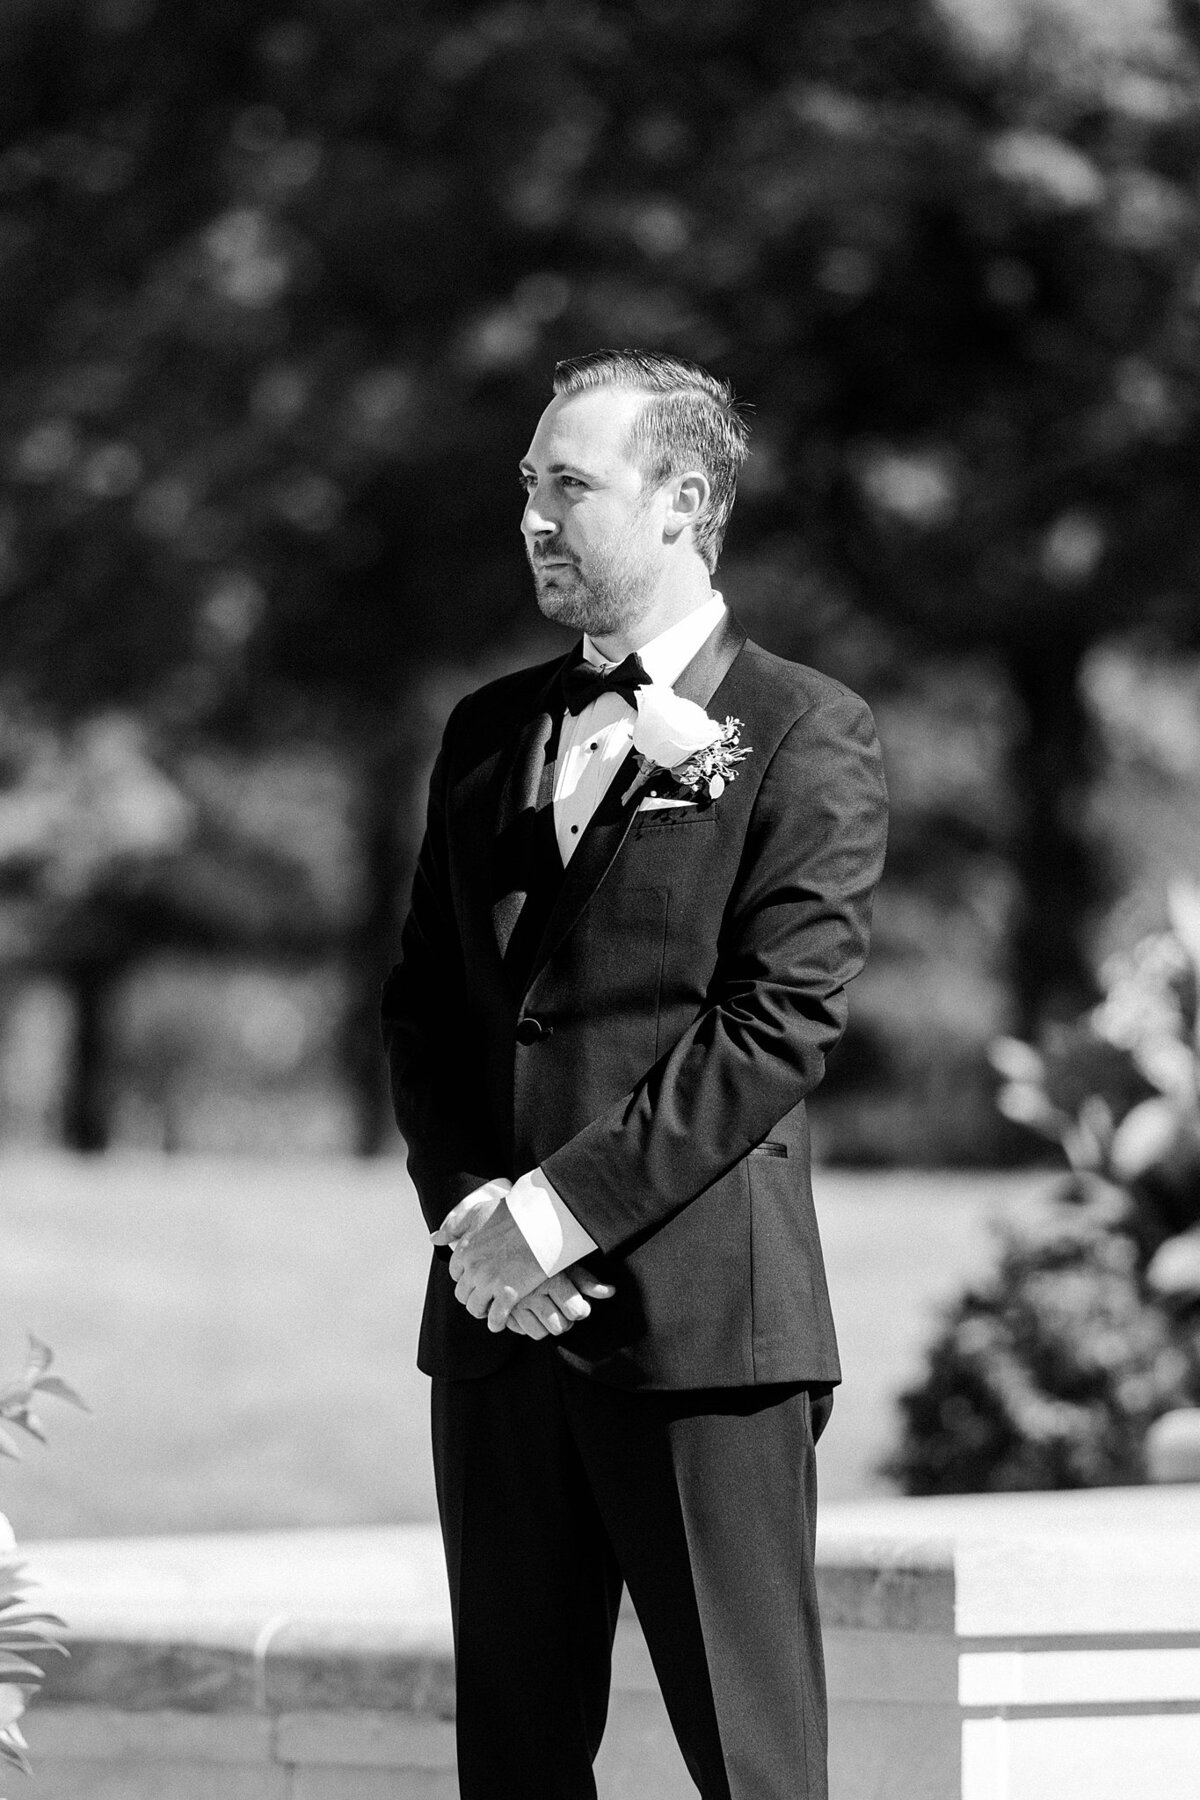 Coxhall Gardens Wedding Photos Alison Mae Photography_7215